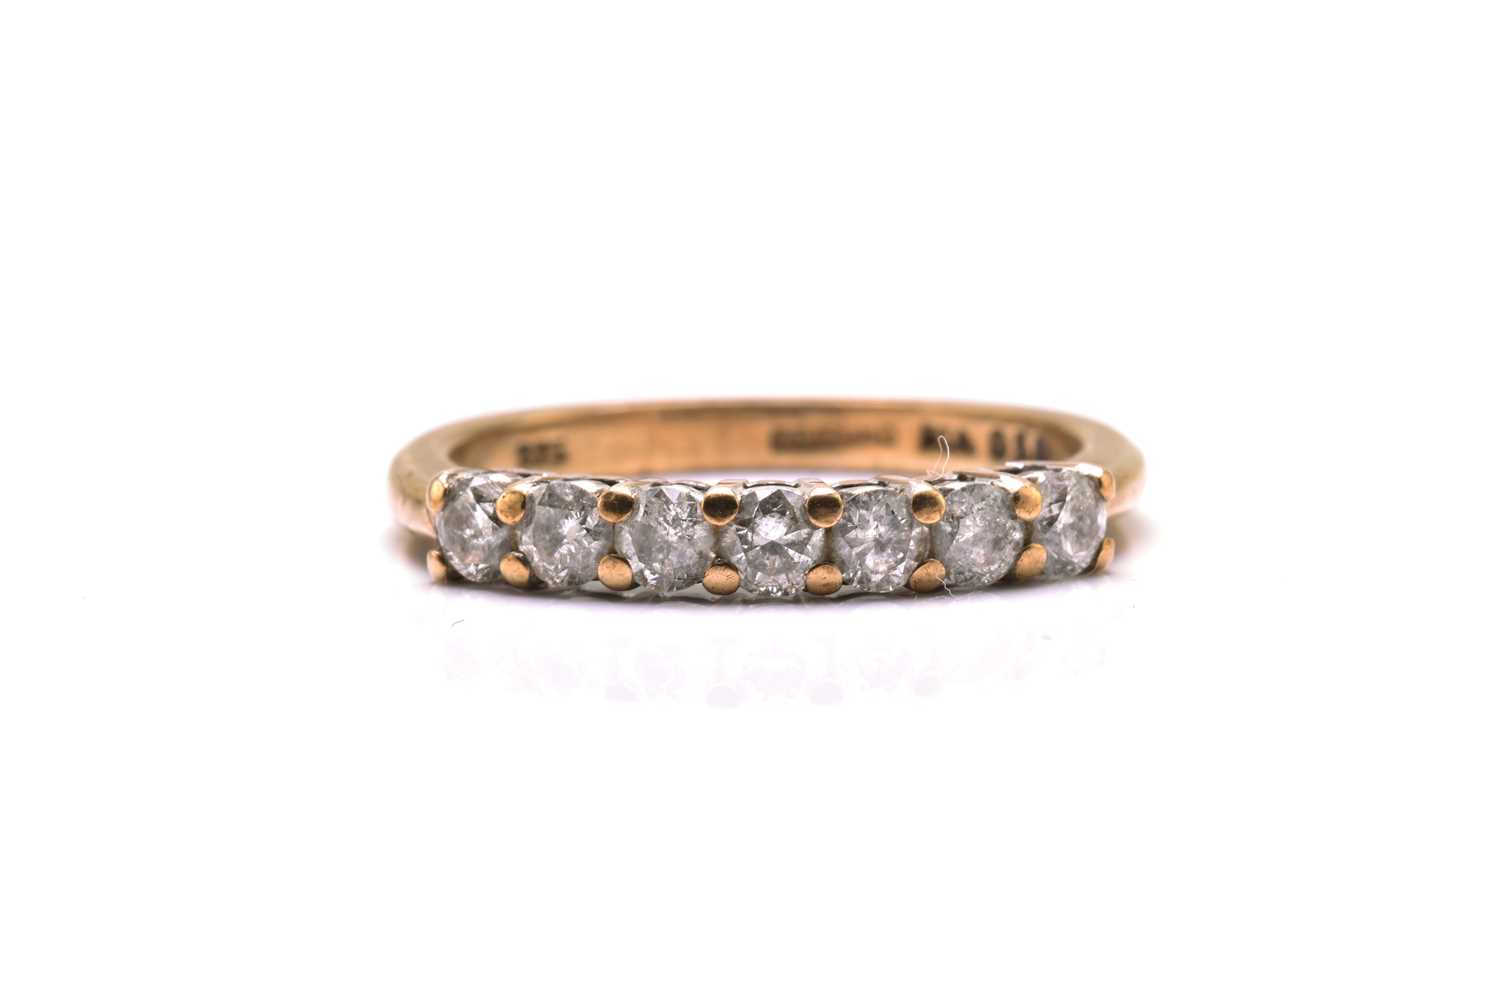 A 9ct gold seven-stone diamond ring, consisting of seven brilliant diamonds with an estimated